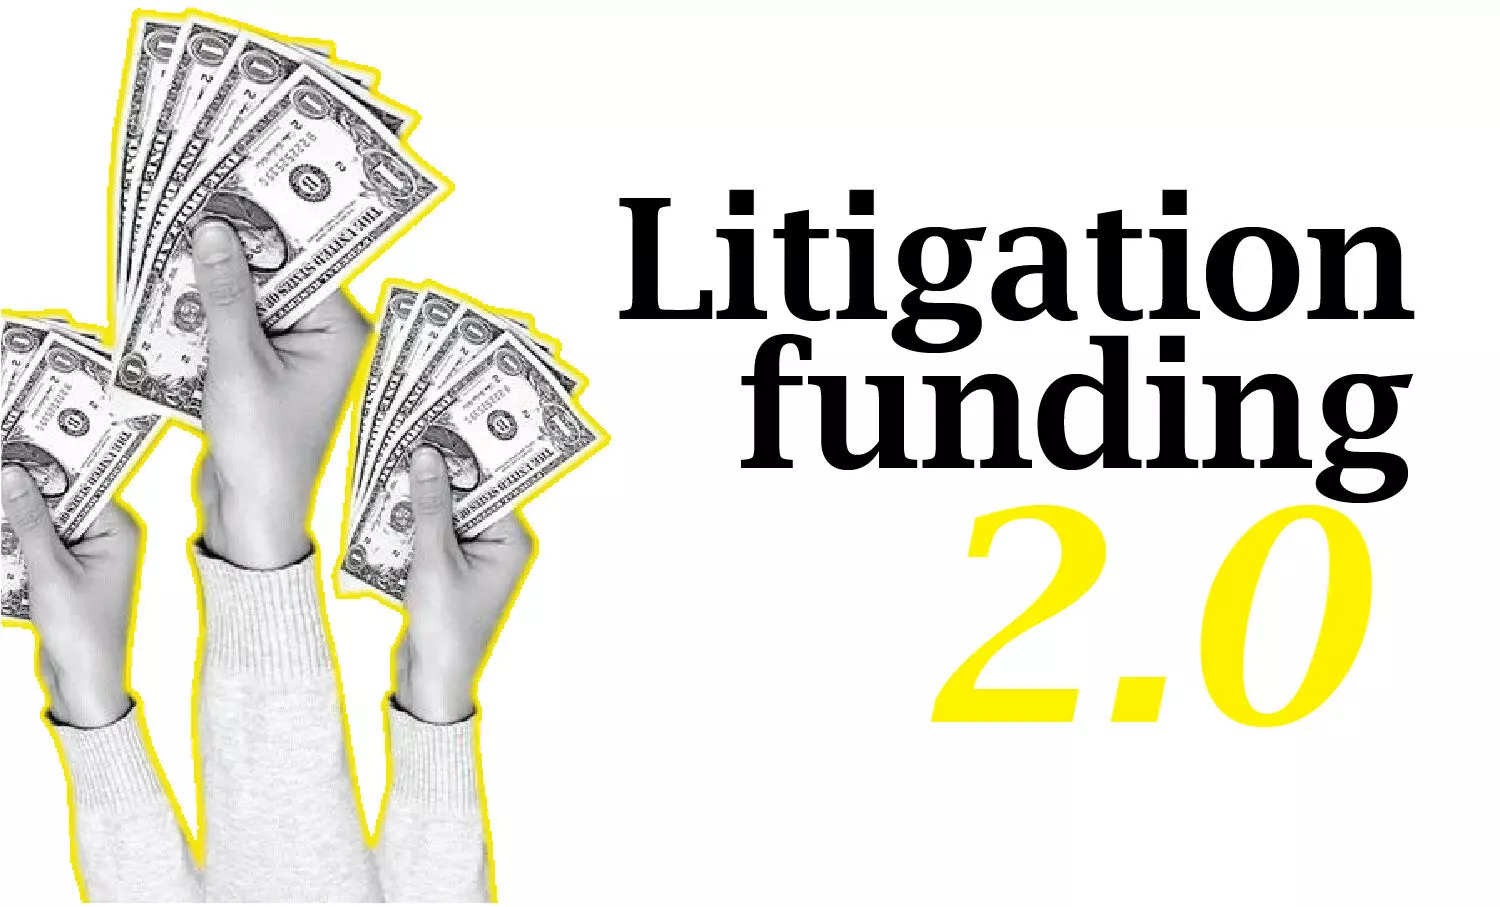 Litigation Funding 2.0